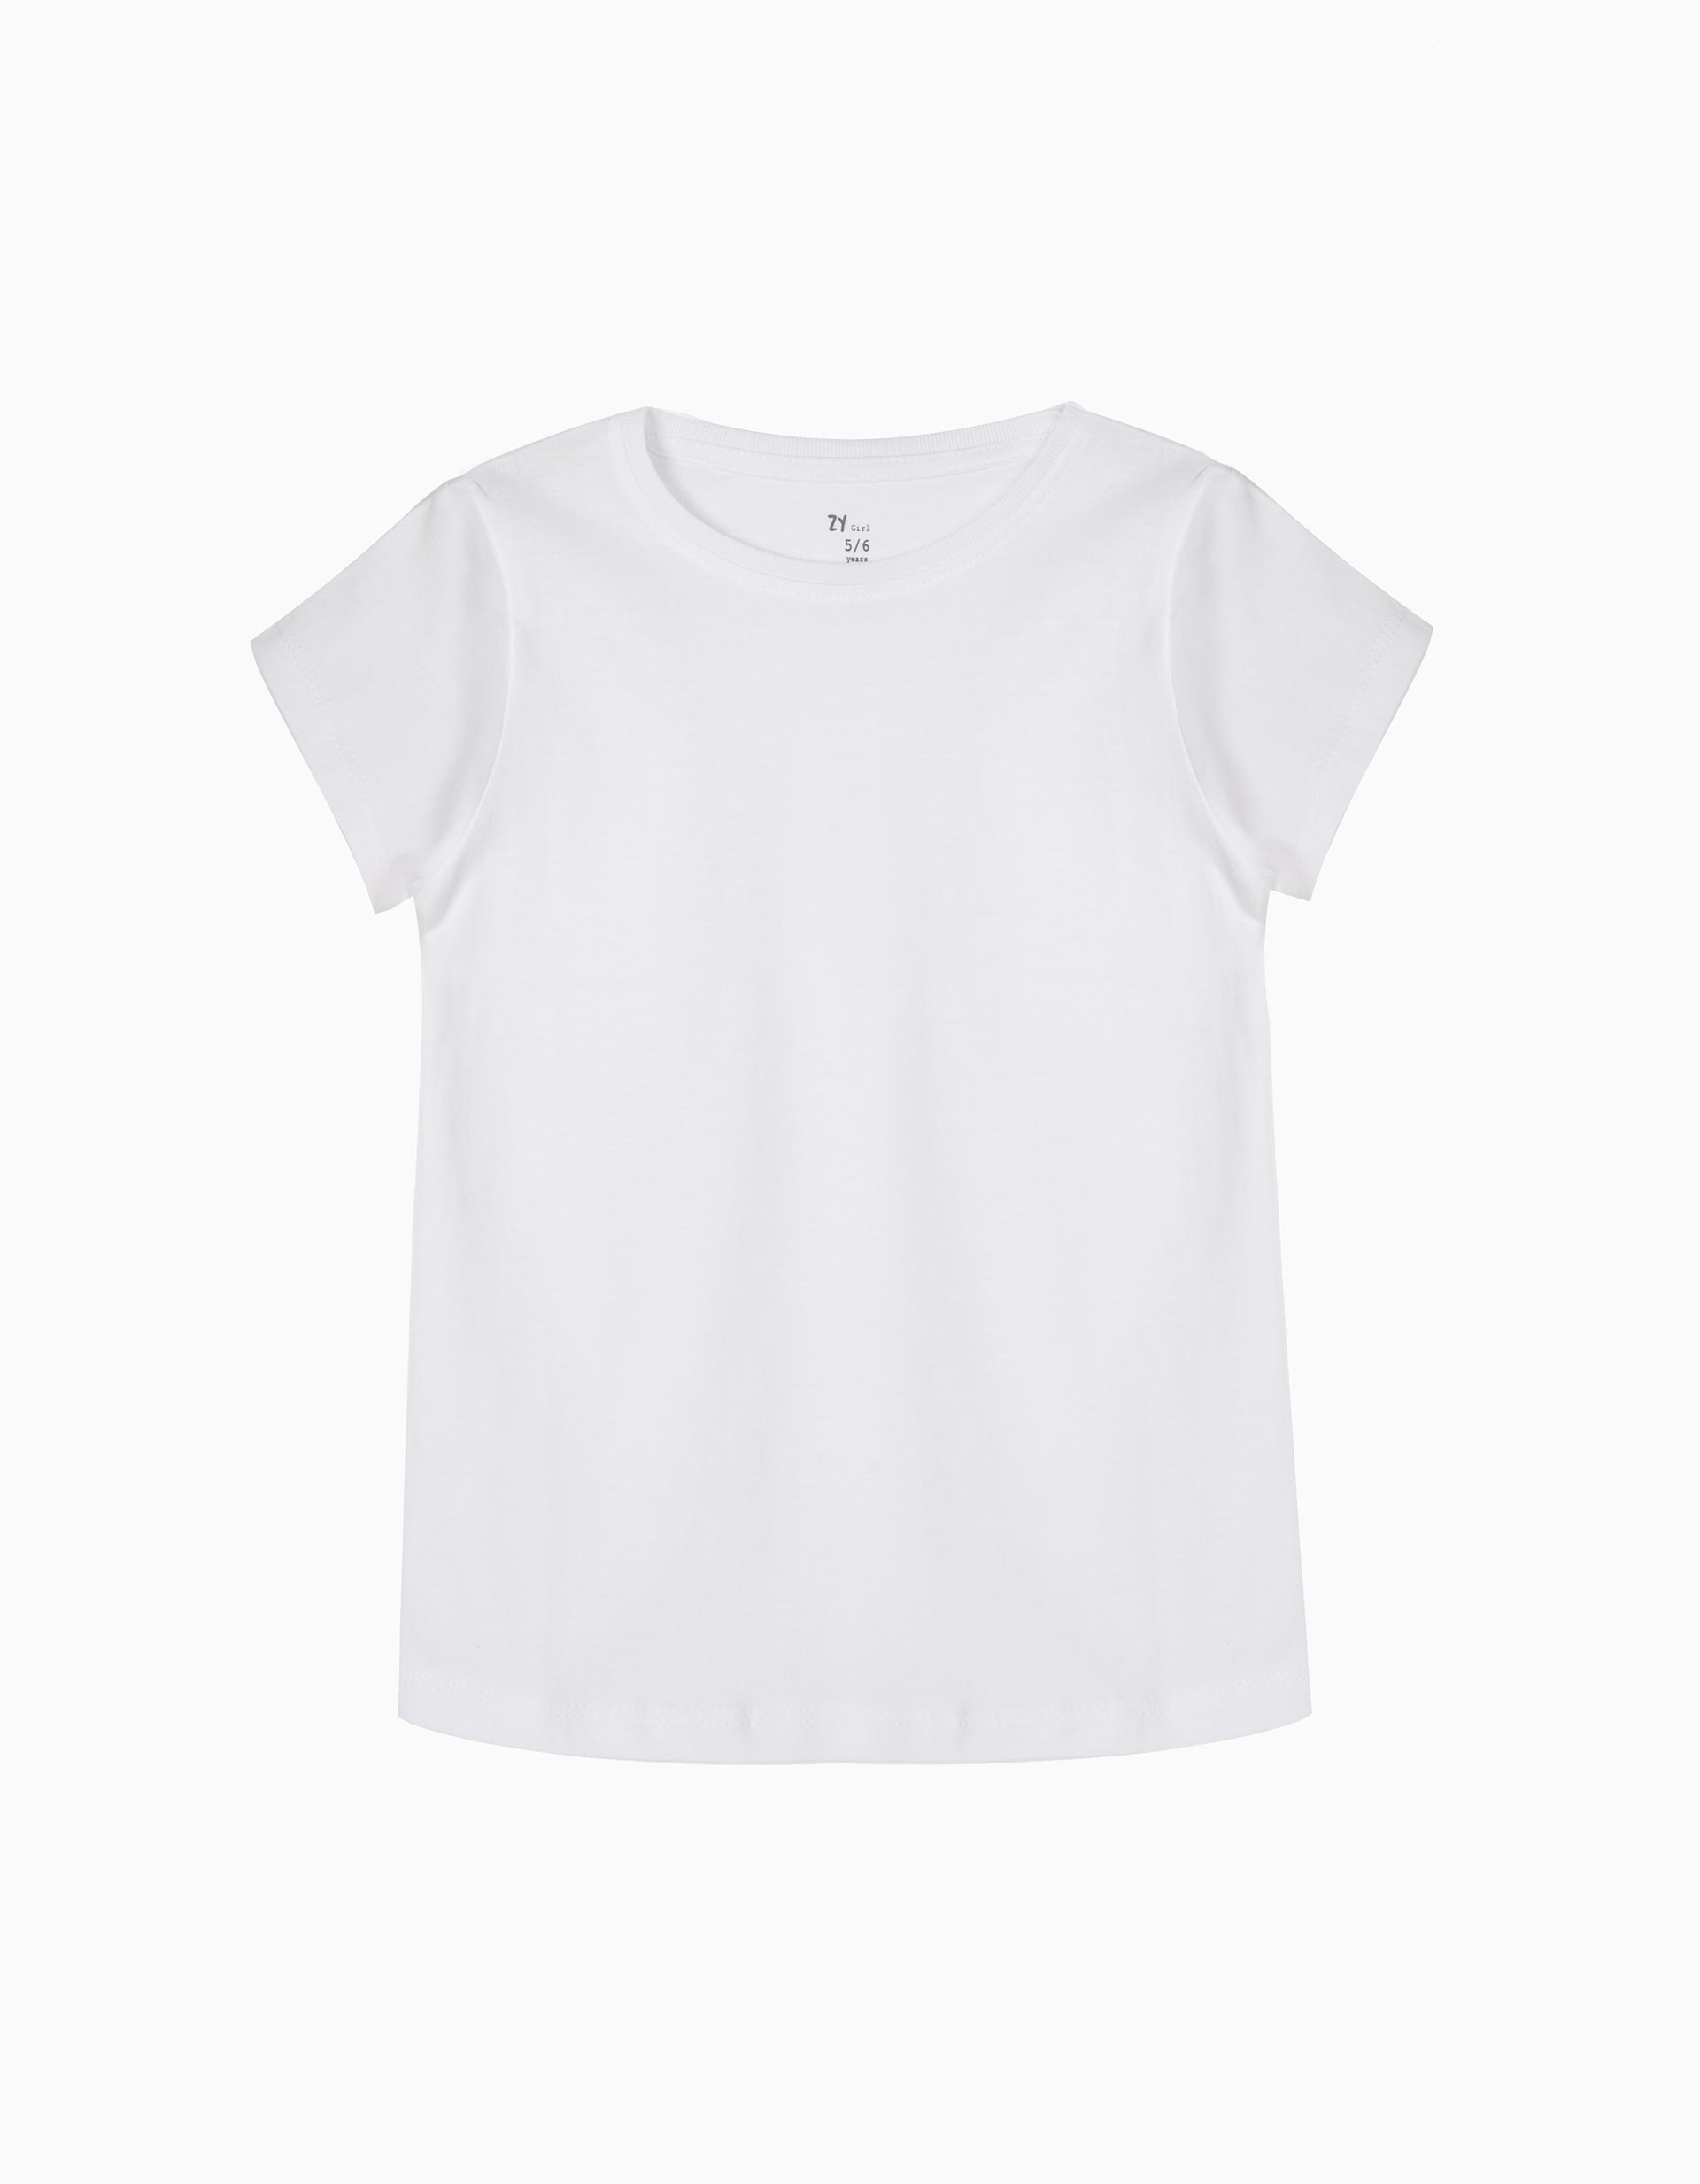 Camiseta Para Niña Blanca Zippy Online